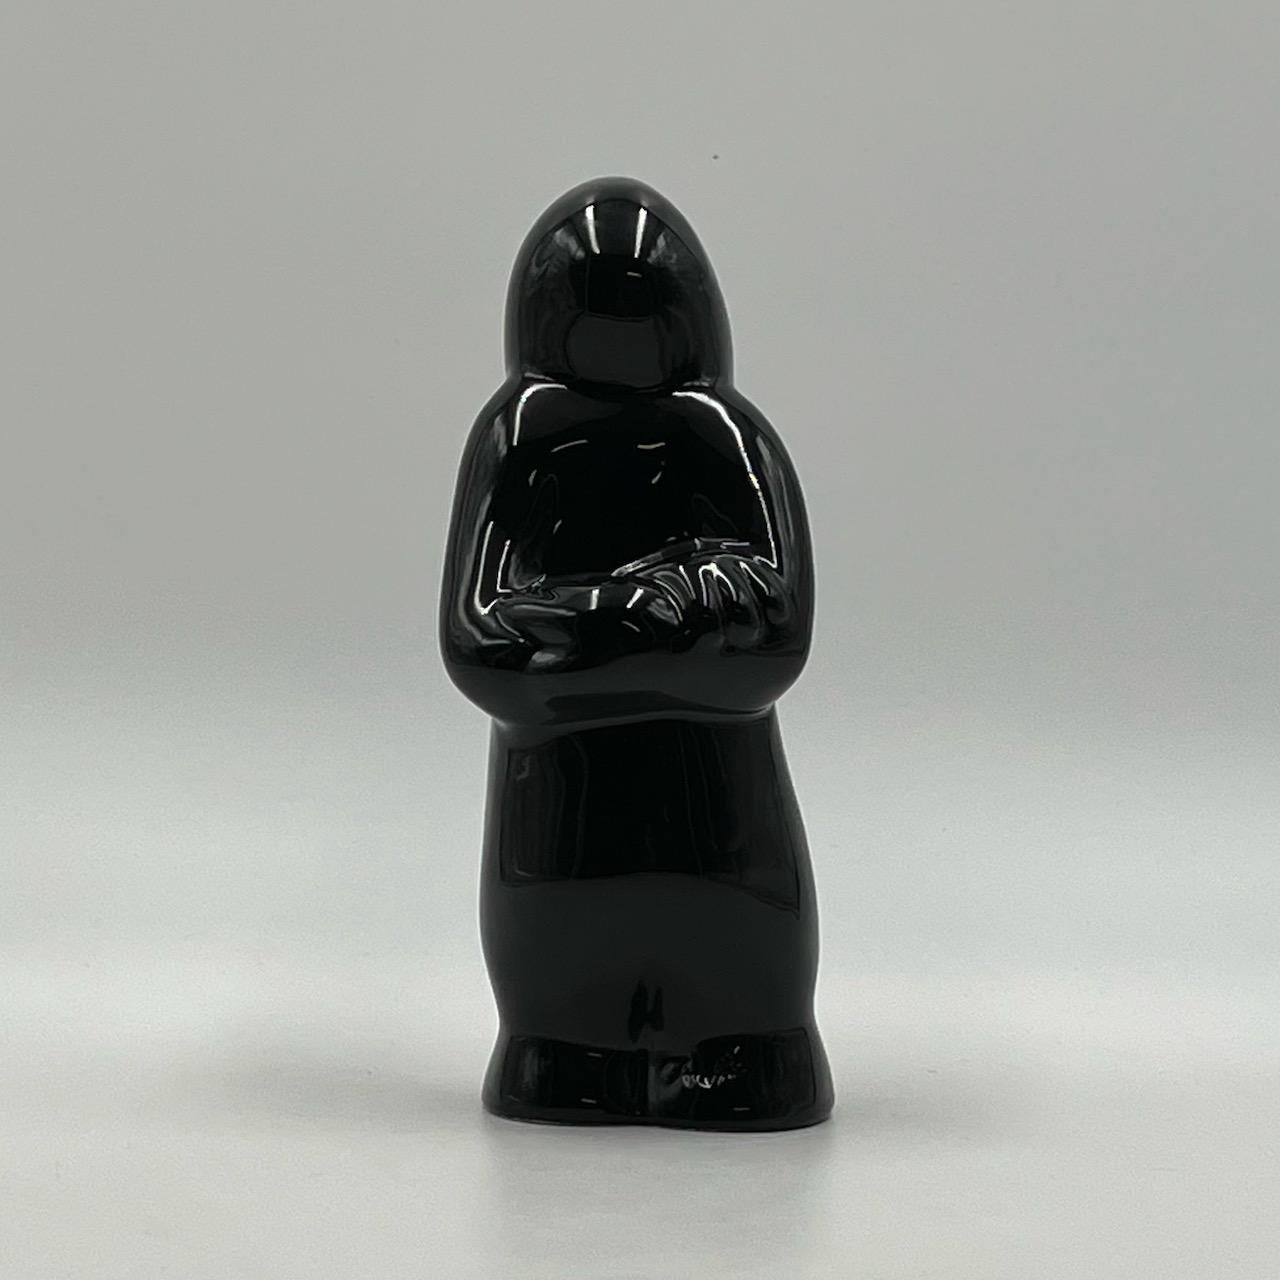 Iconic ceramic sculpture realized by Osvaldo Cavandoli. This is the black 